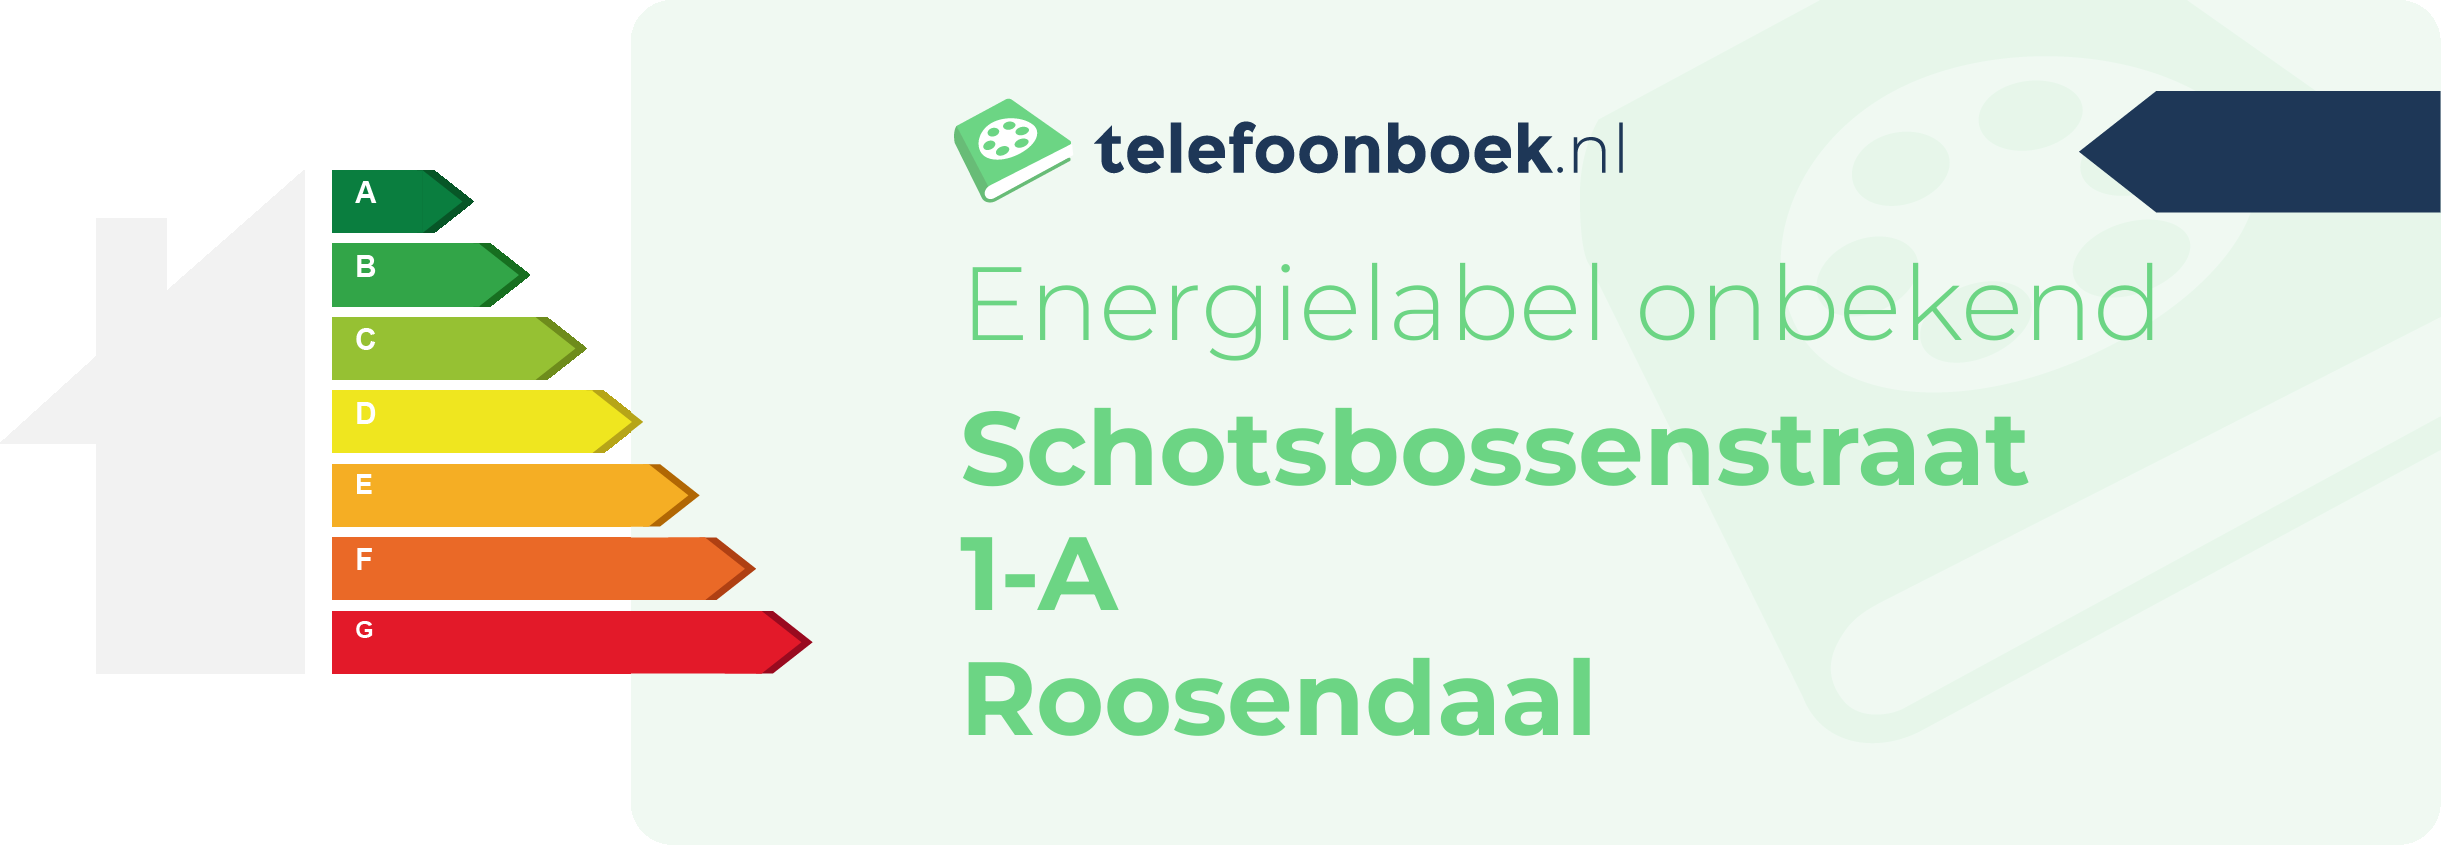 Energielabel Schotsbossenstraat 1-A Roosendaal